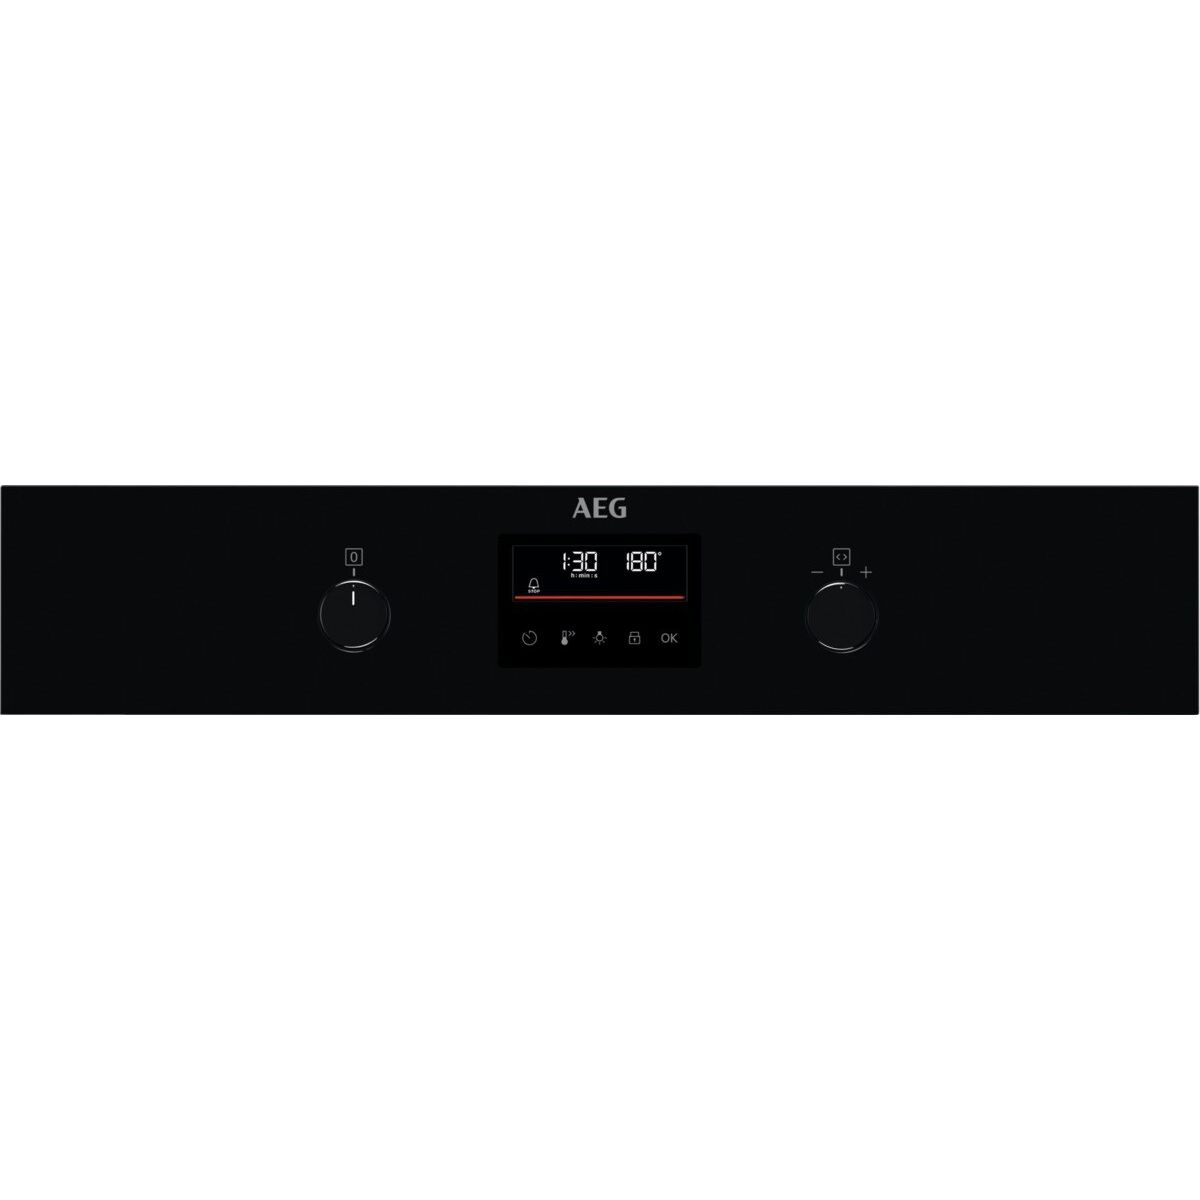 AEG BEB335061B Single Oven Electric SurroundCook in Black